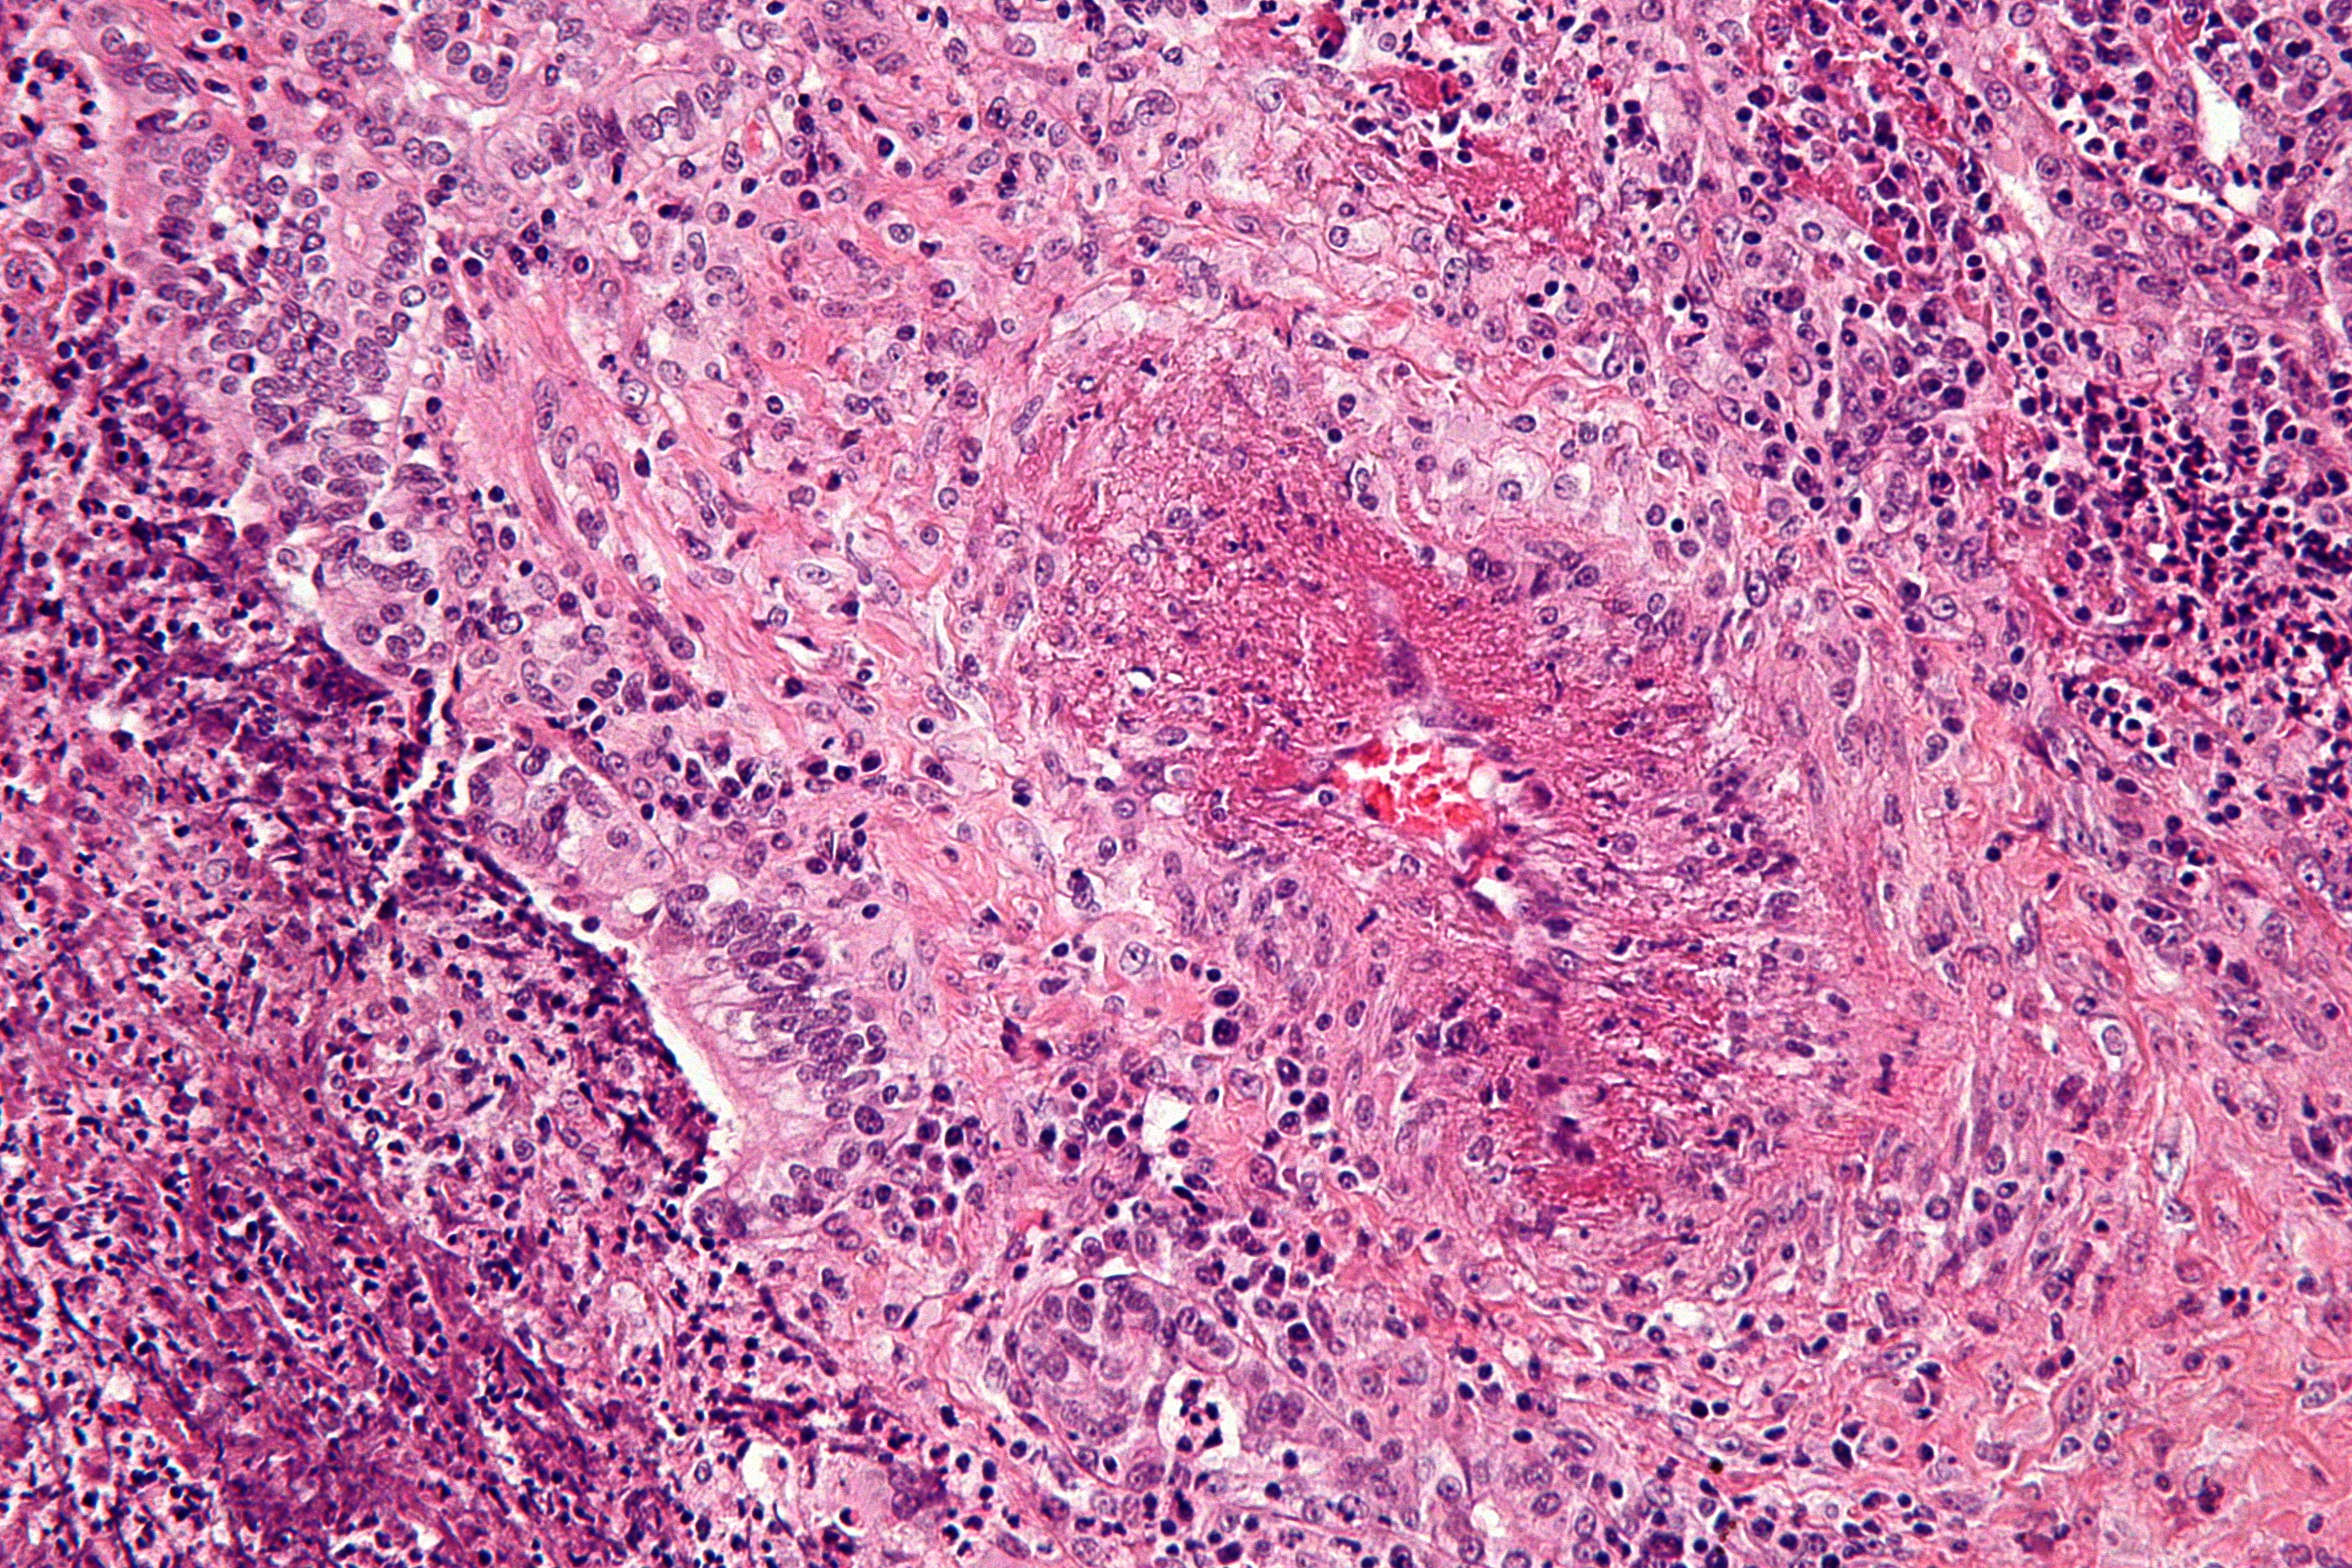 File:Granulomatosis with polyangiitis.jpg